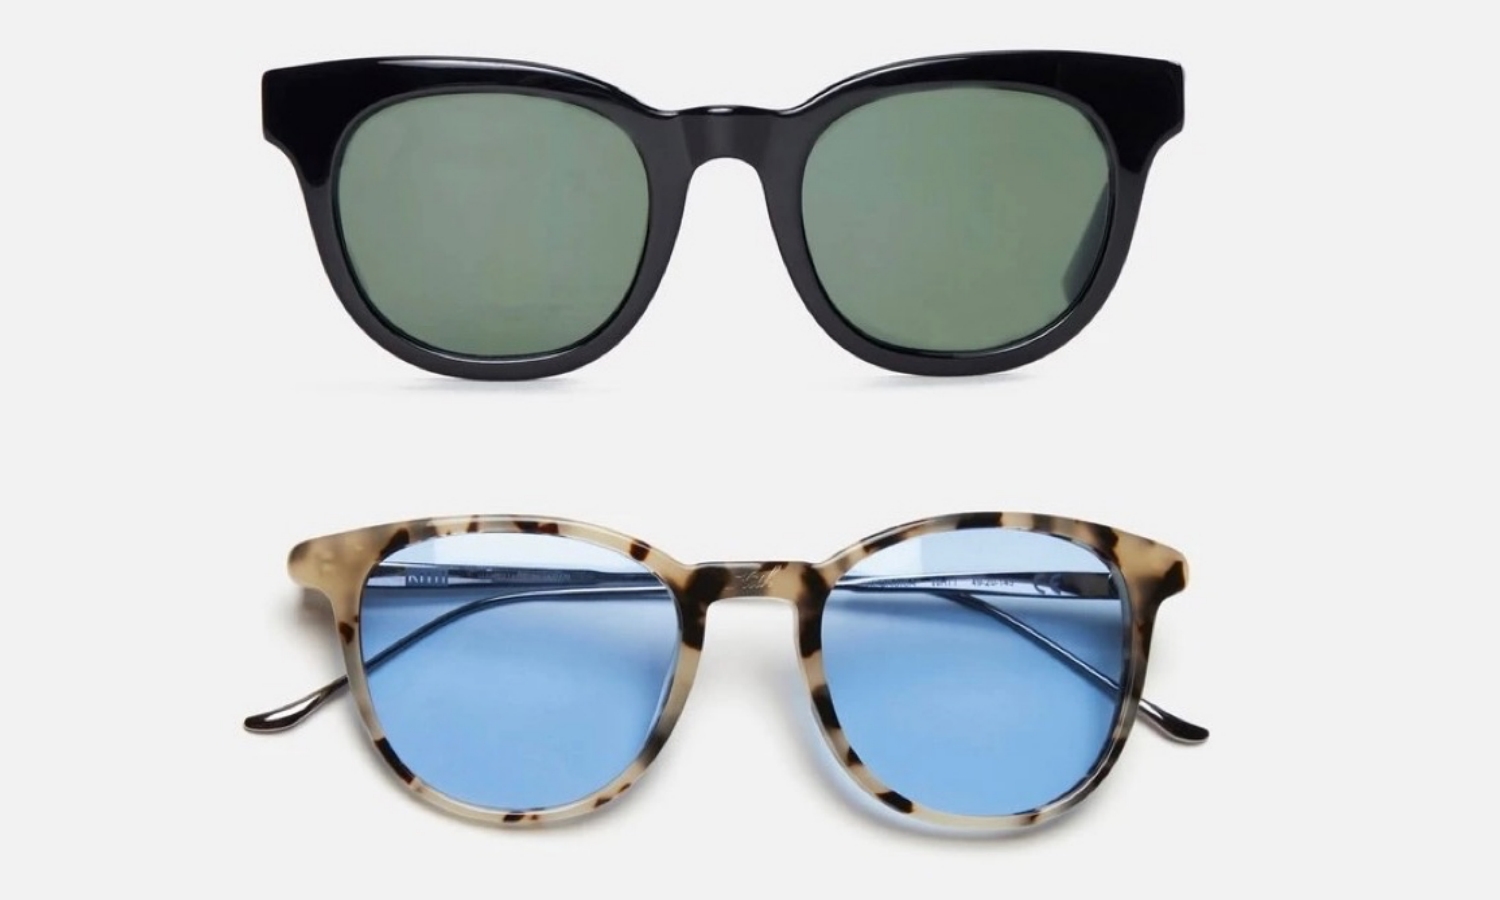 KITH Summer 2021 Sunglasses 即将发售